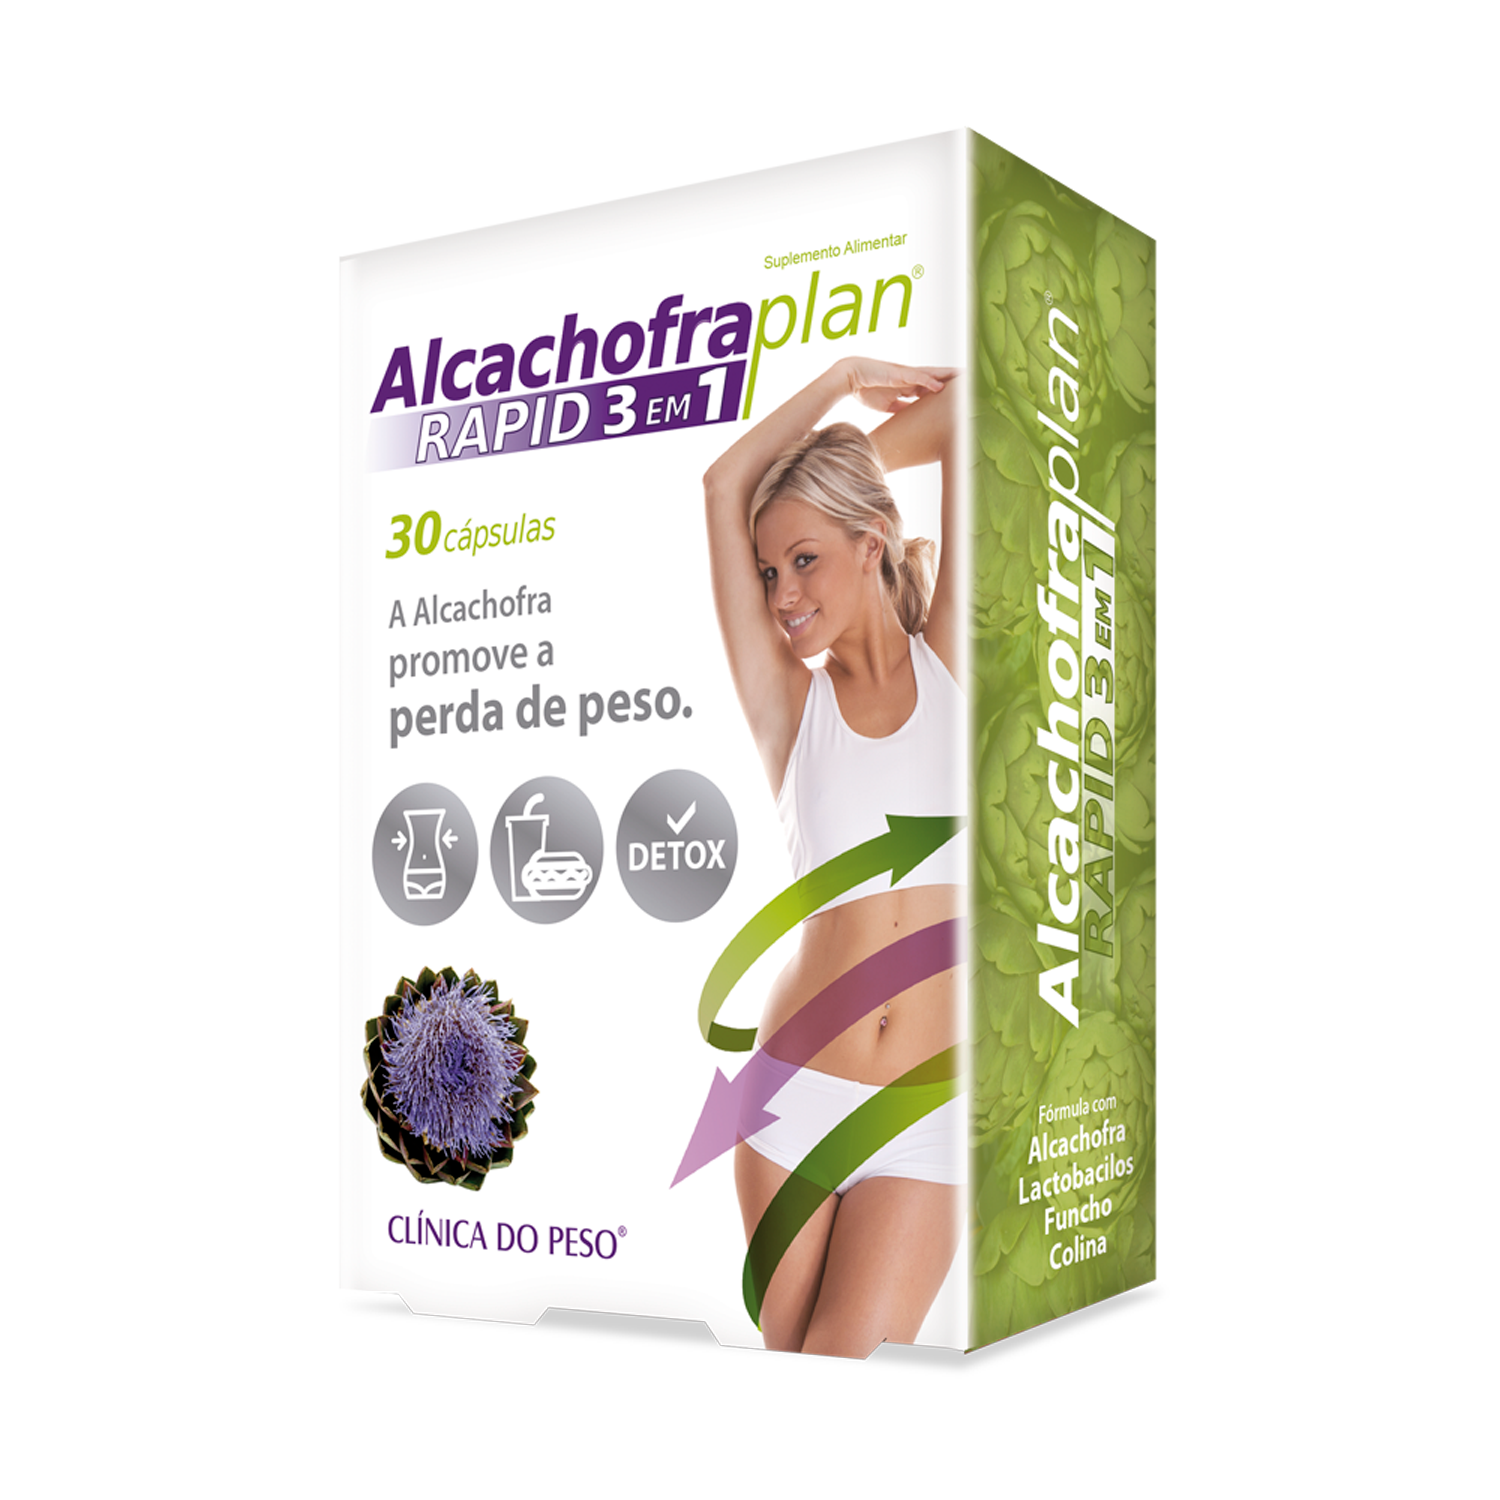 5200556 alcachofra plan rapid 3 em 1 capsulas fitness, nutrition